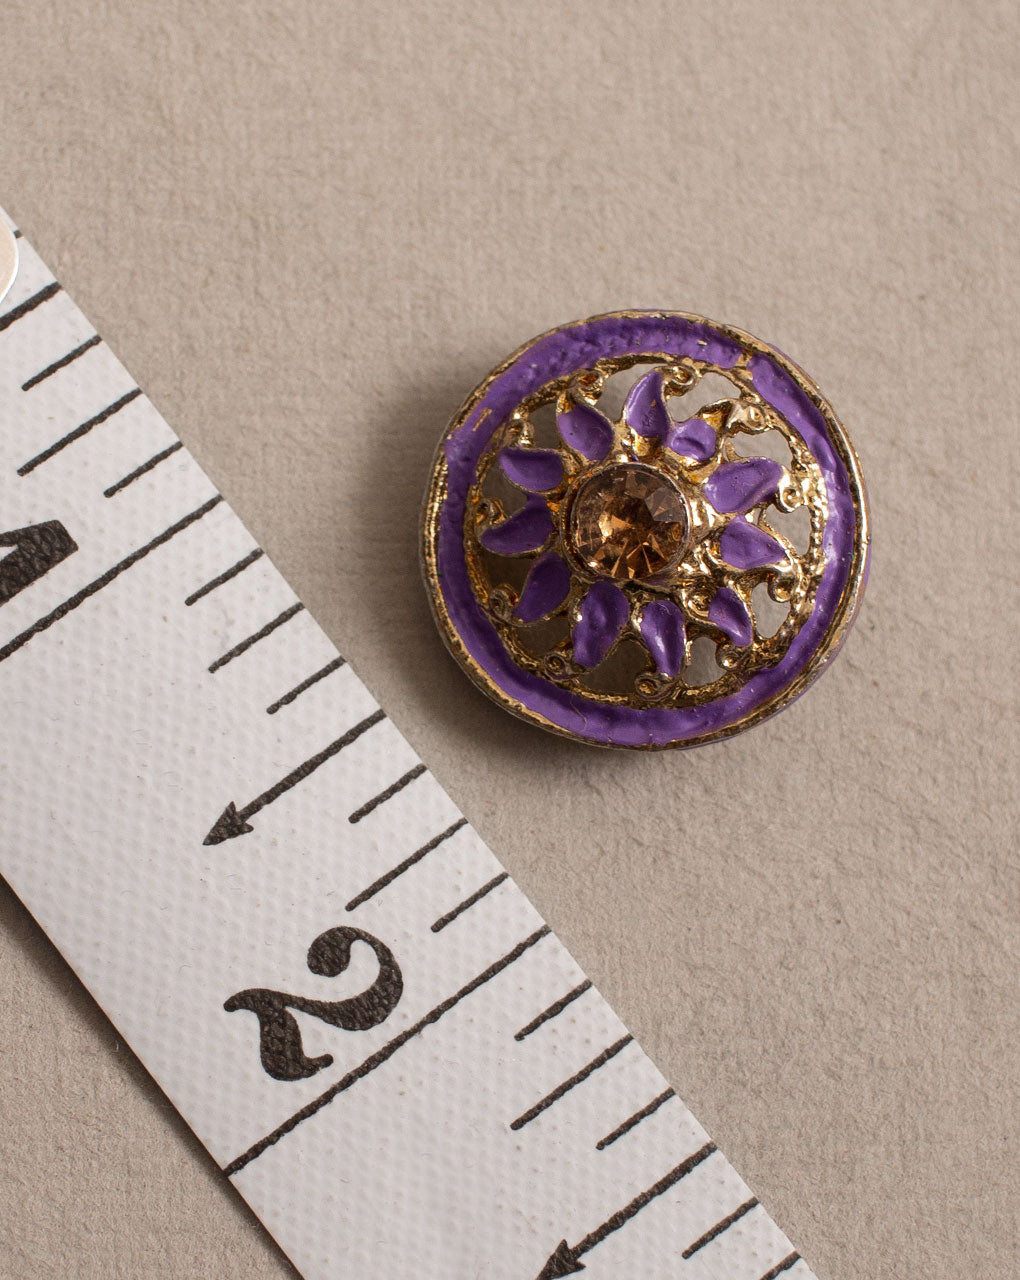 Antique Metal Casting Button ( Set Of 4 ) - Fabriclore.com